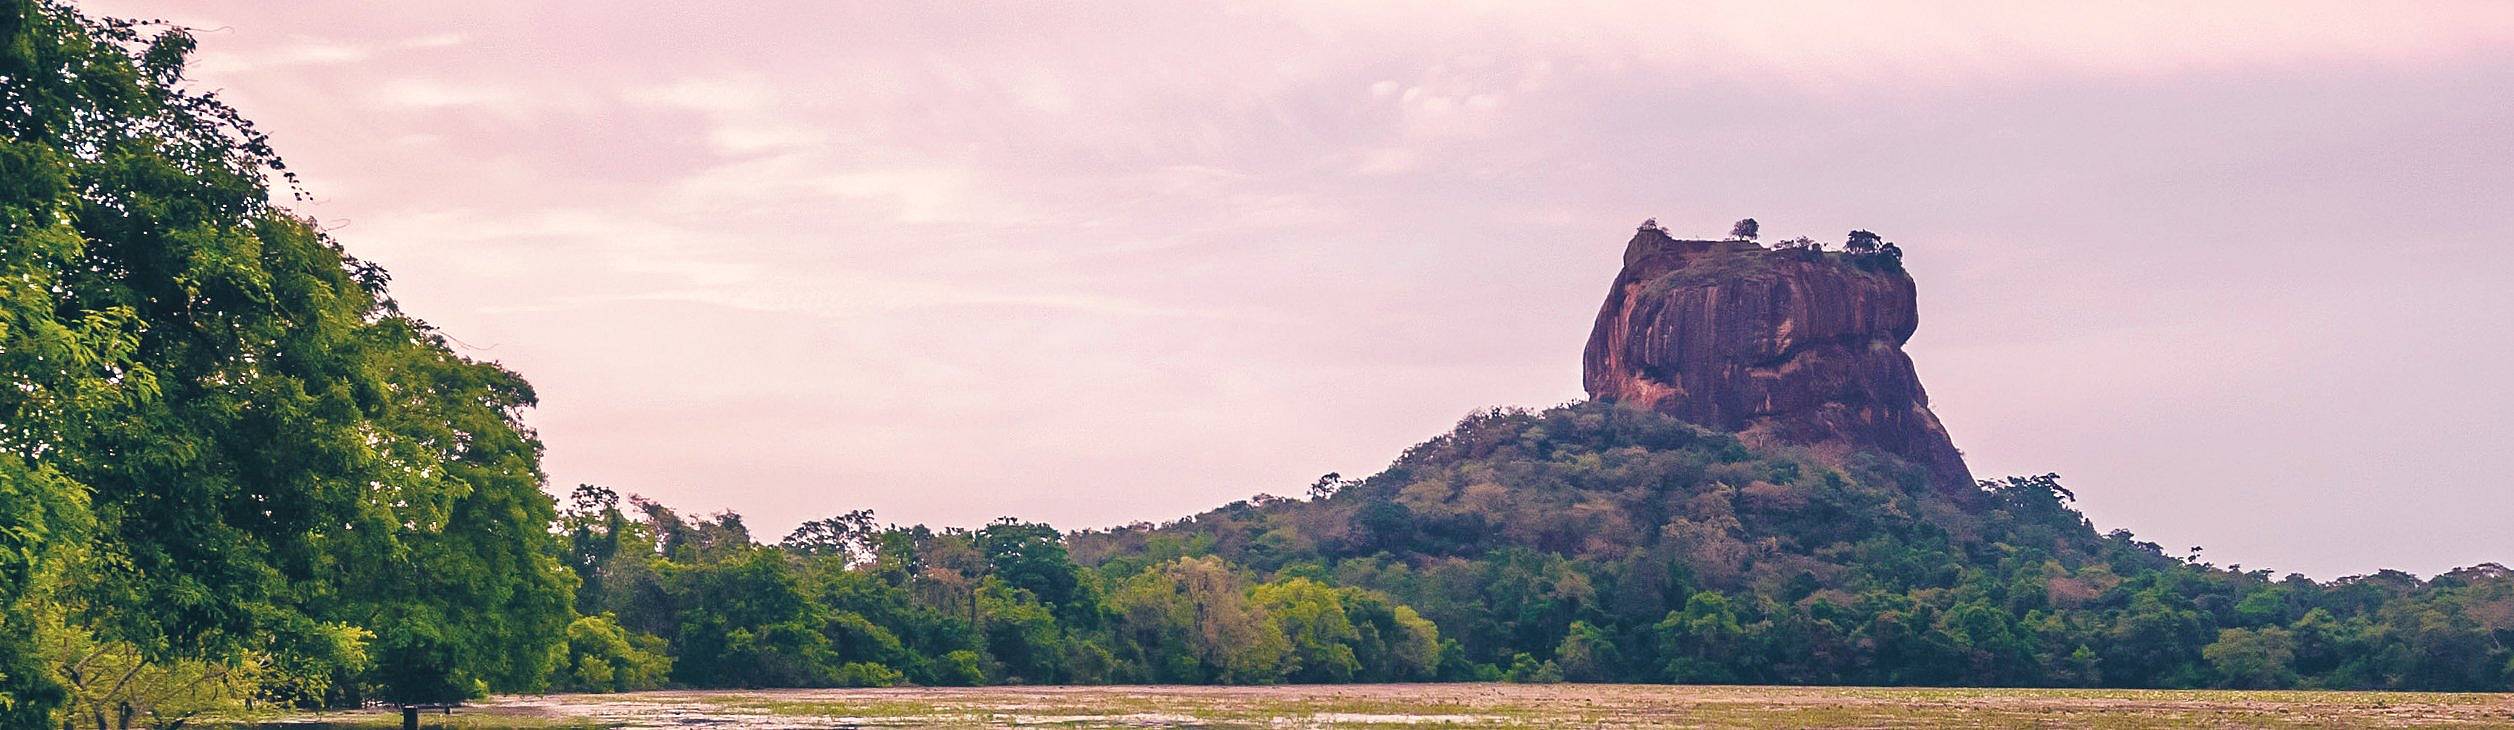 la fortaleza de Sigiriya